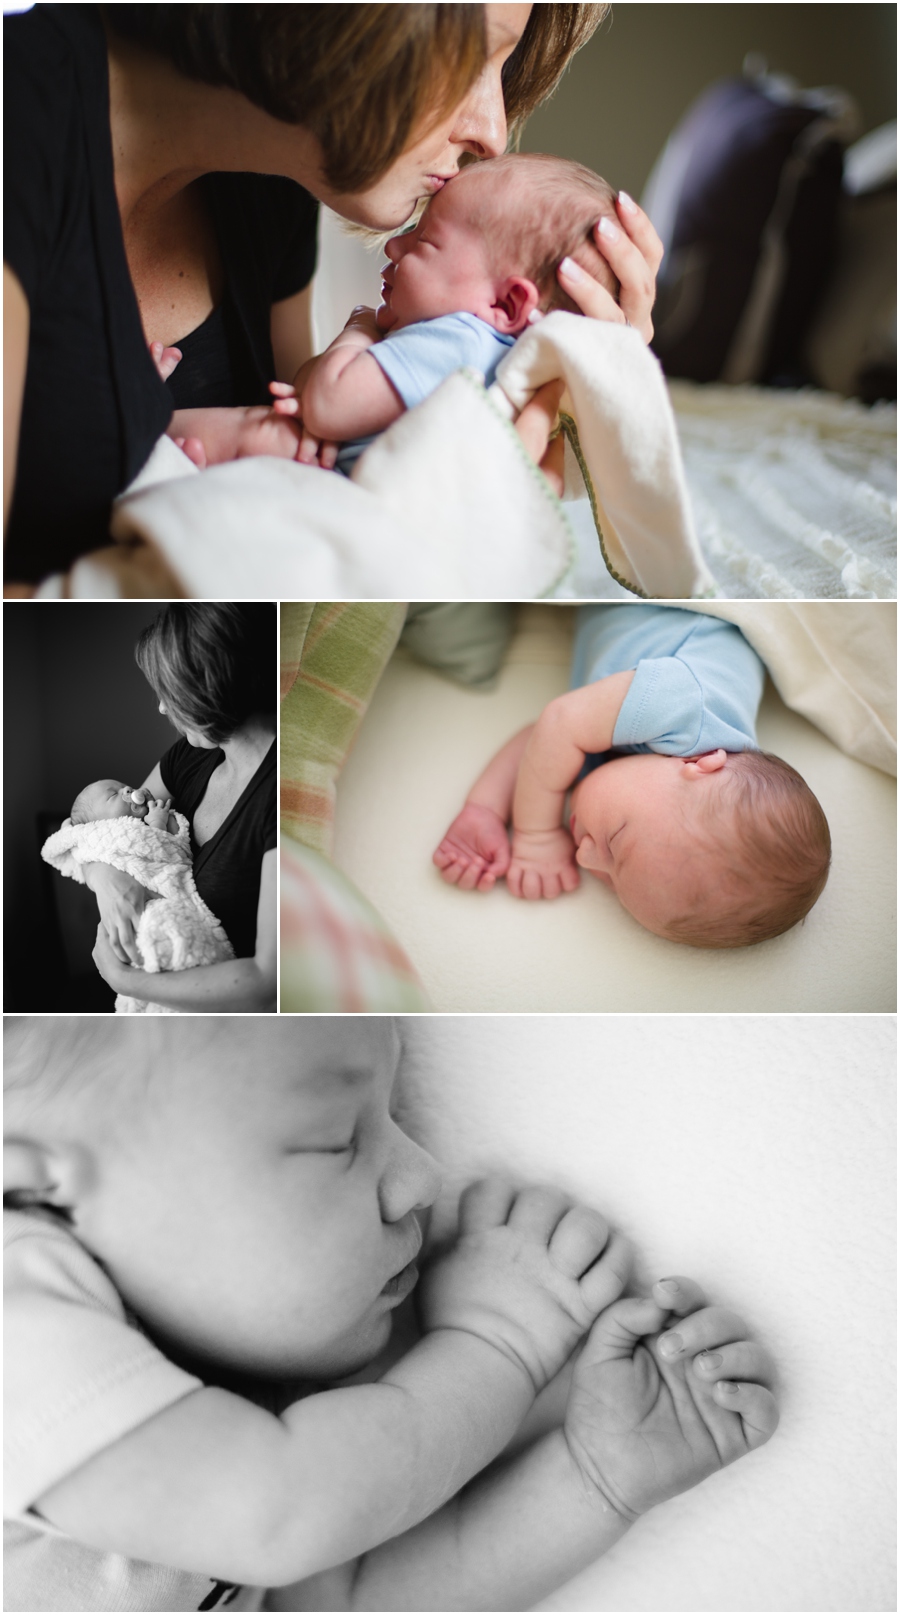 Milwaukee Infant Photography, Newborn Photography, Fresh Frame Photography, Natural Baby Photography, One-year Photography, Professional Infant Photography, Documentary Photography, Lifestyle Photography